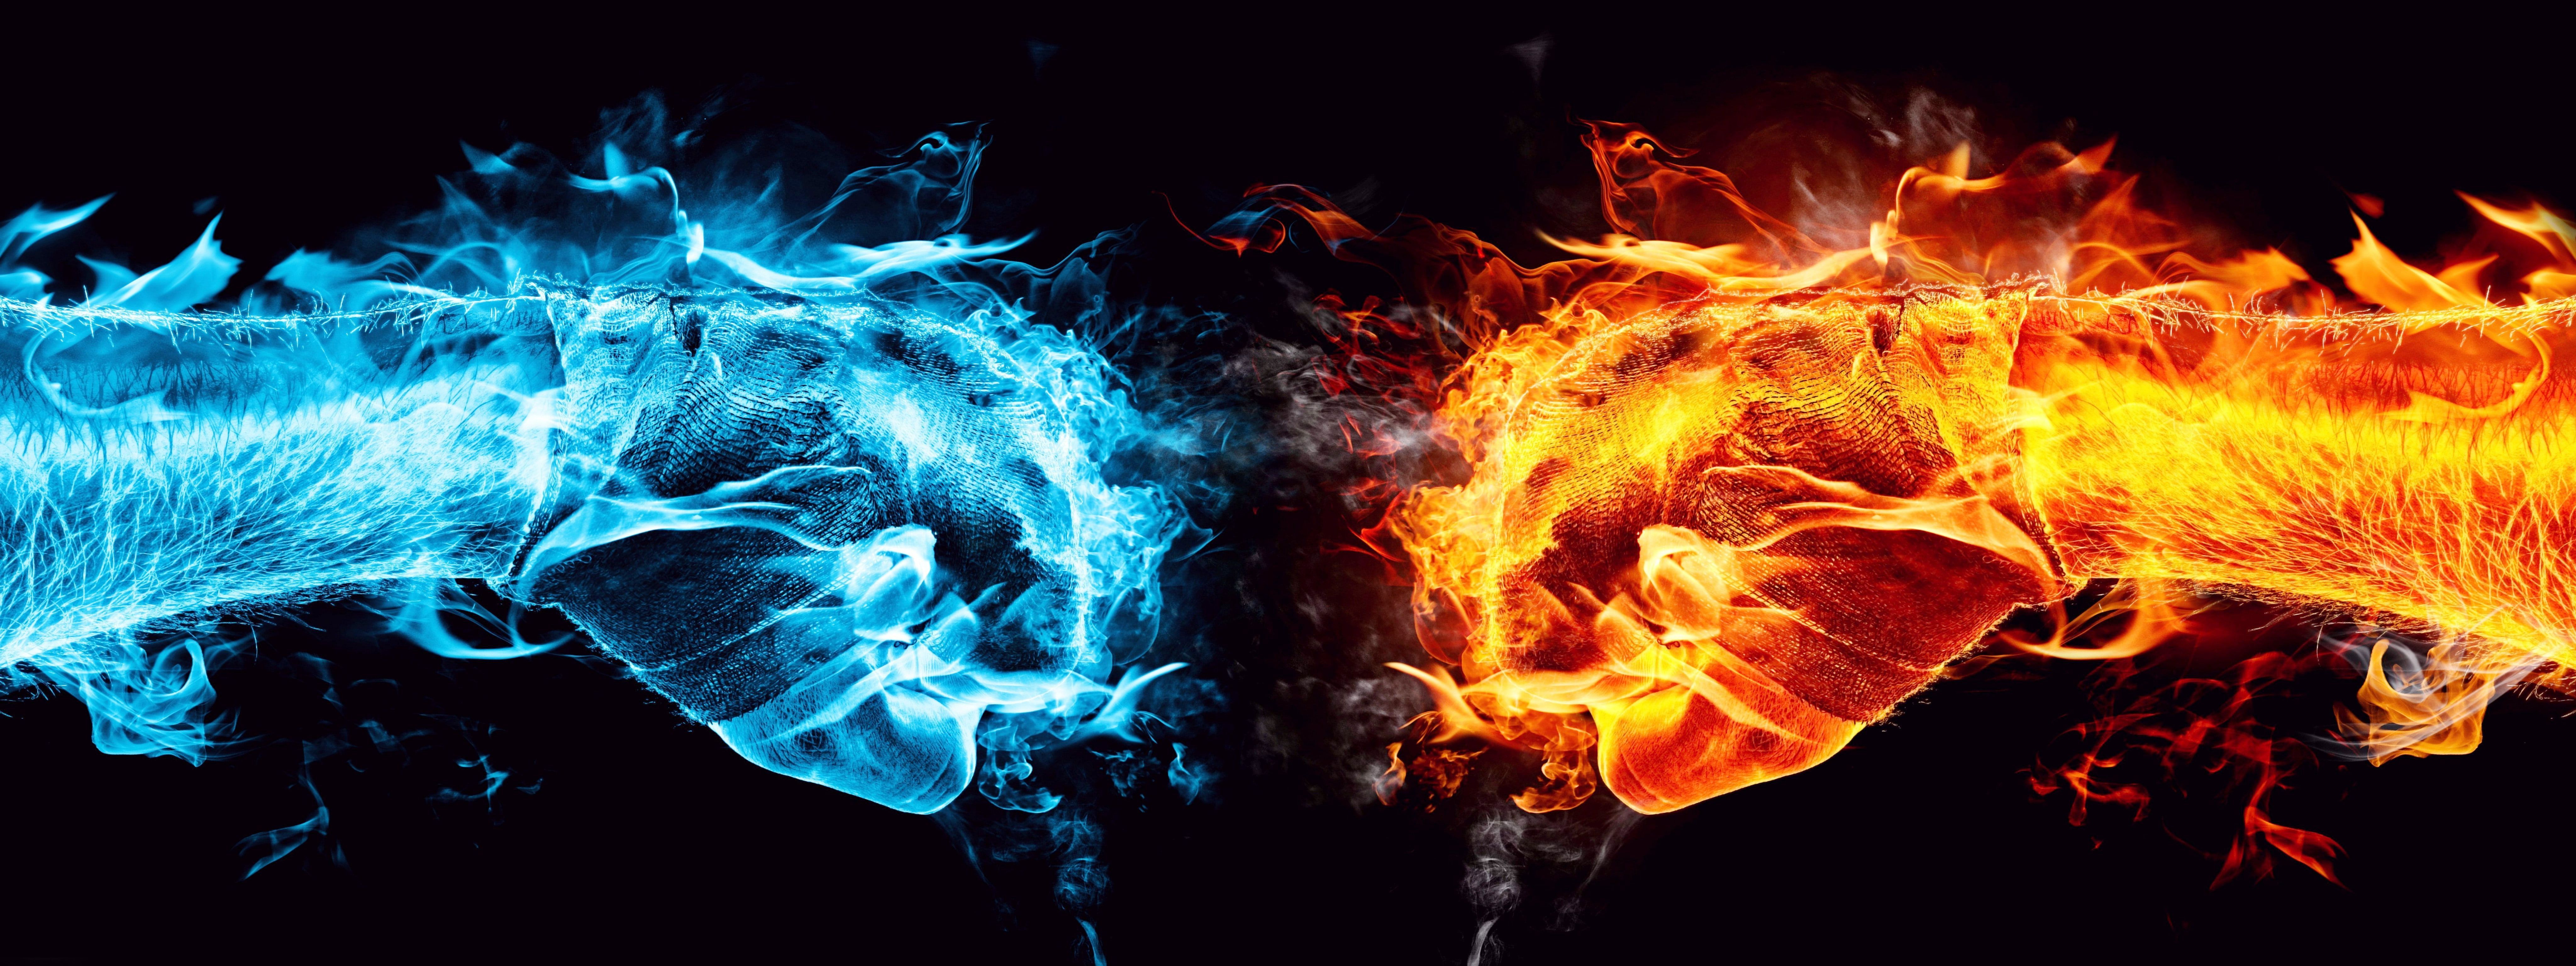 battle dual screen #elemental #elements #fire #fists #water K #wallpaper #hdwallpaper #desktop. Fire cover, Cover photo, Free facebook cover photo